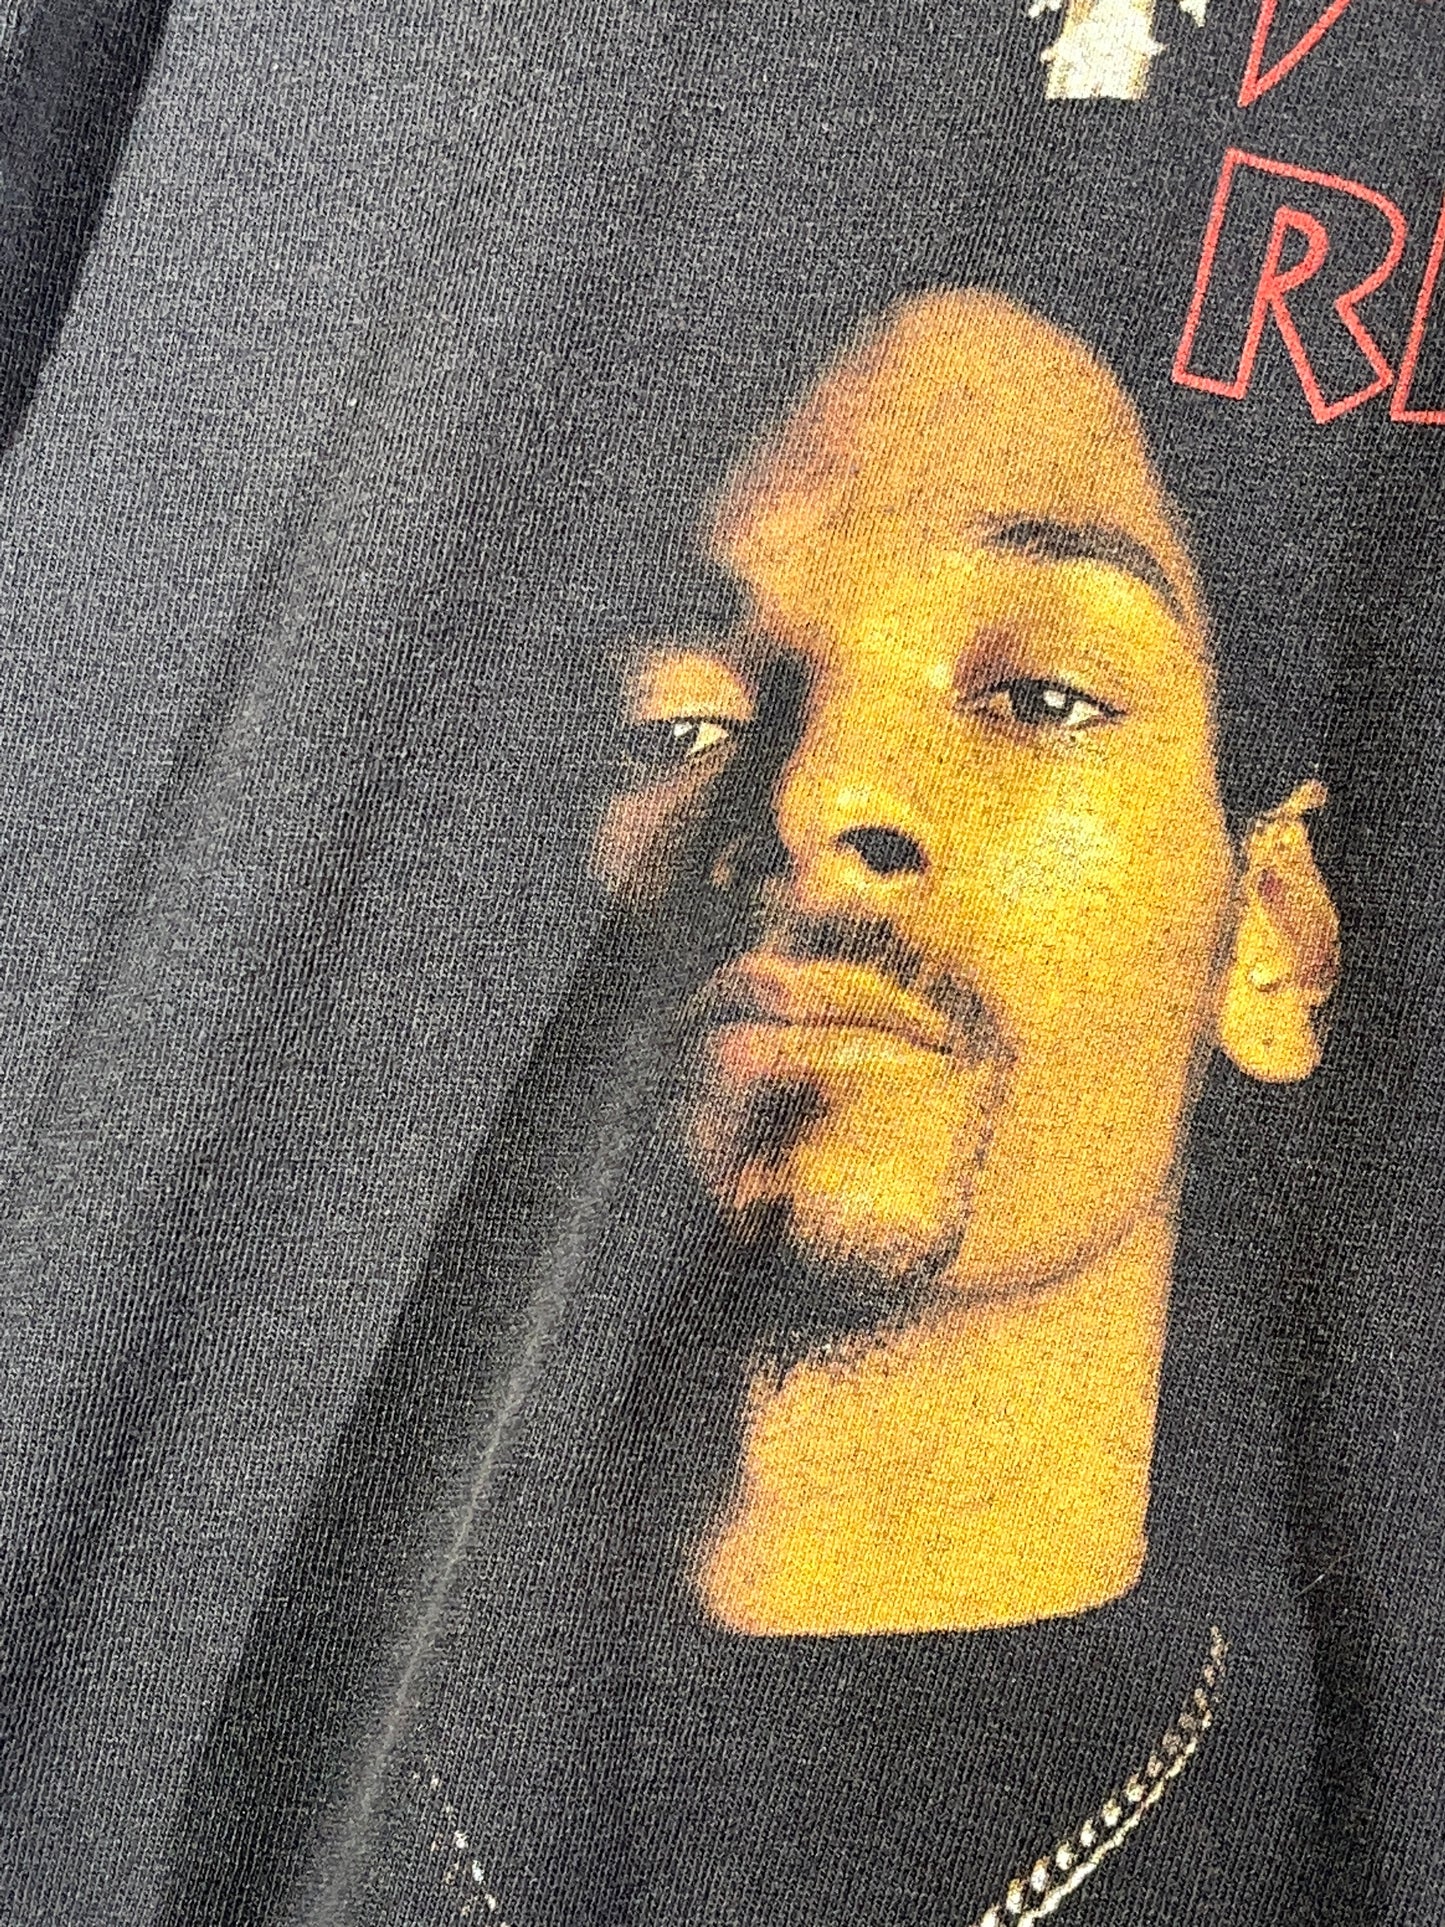 Vintage Death Row Records T-Shirt 2PAC SUGE SNOOP DRE